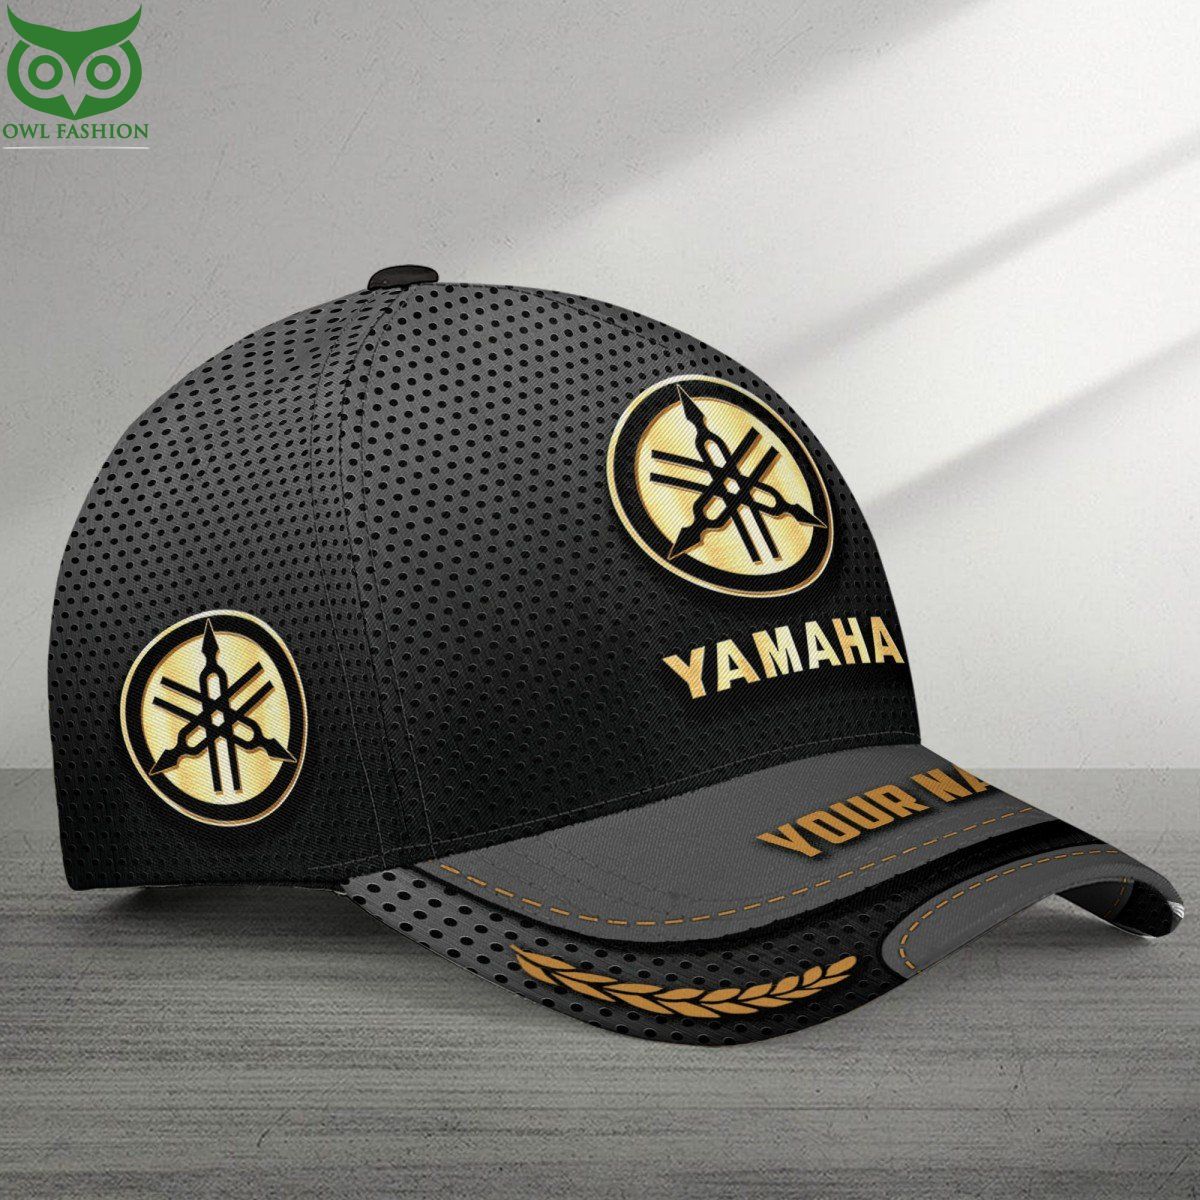 yamaha motor design new classic cap 3 ymZid.jpg